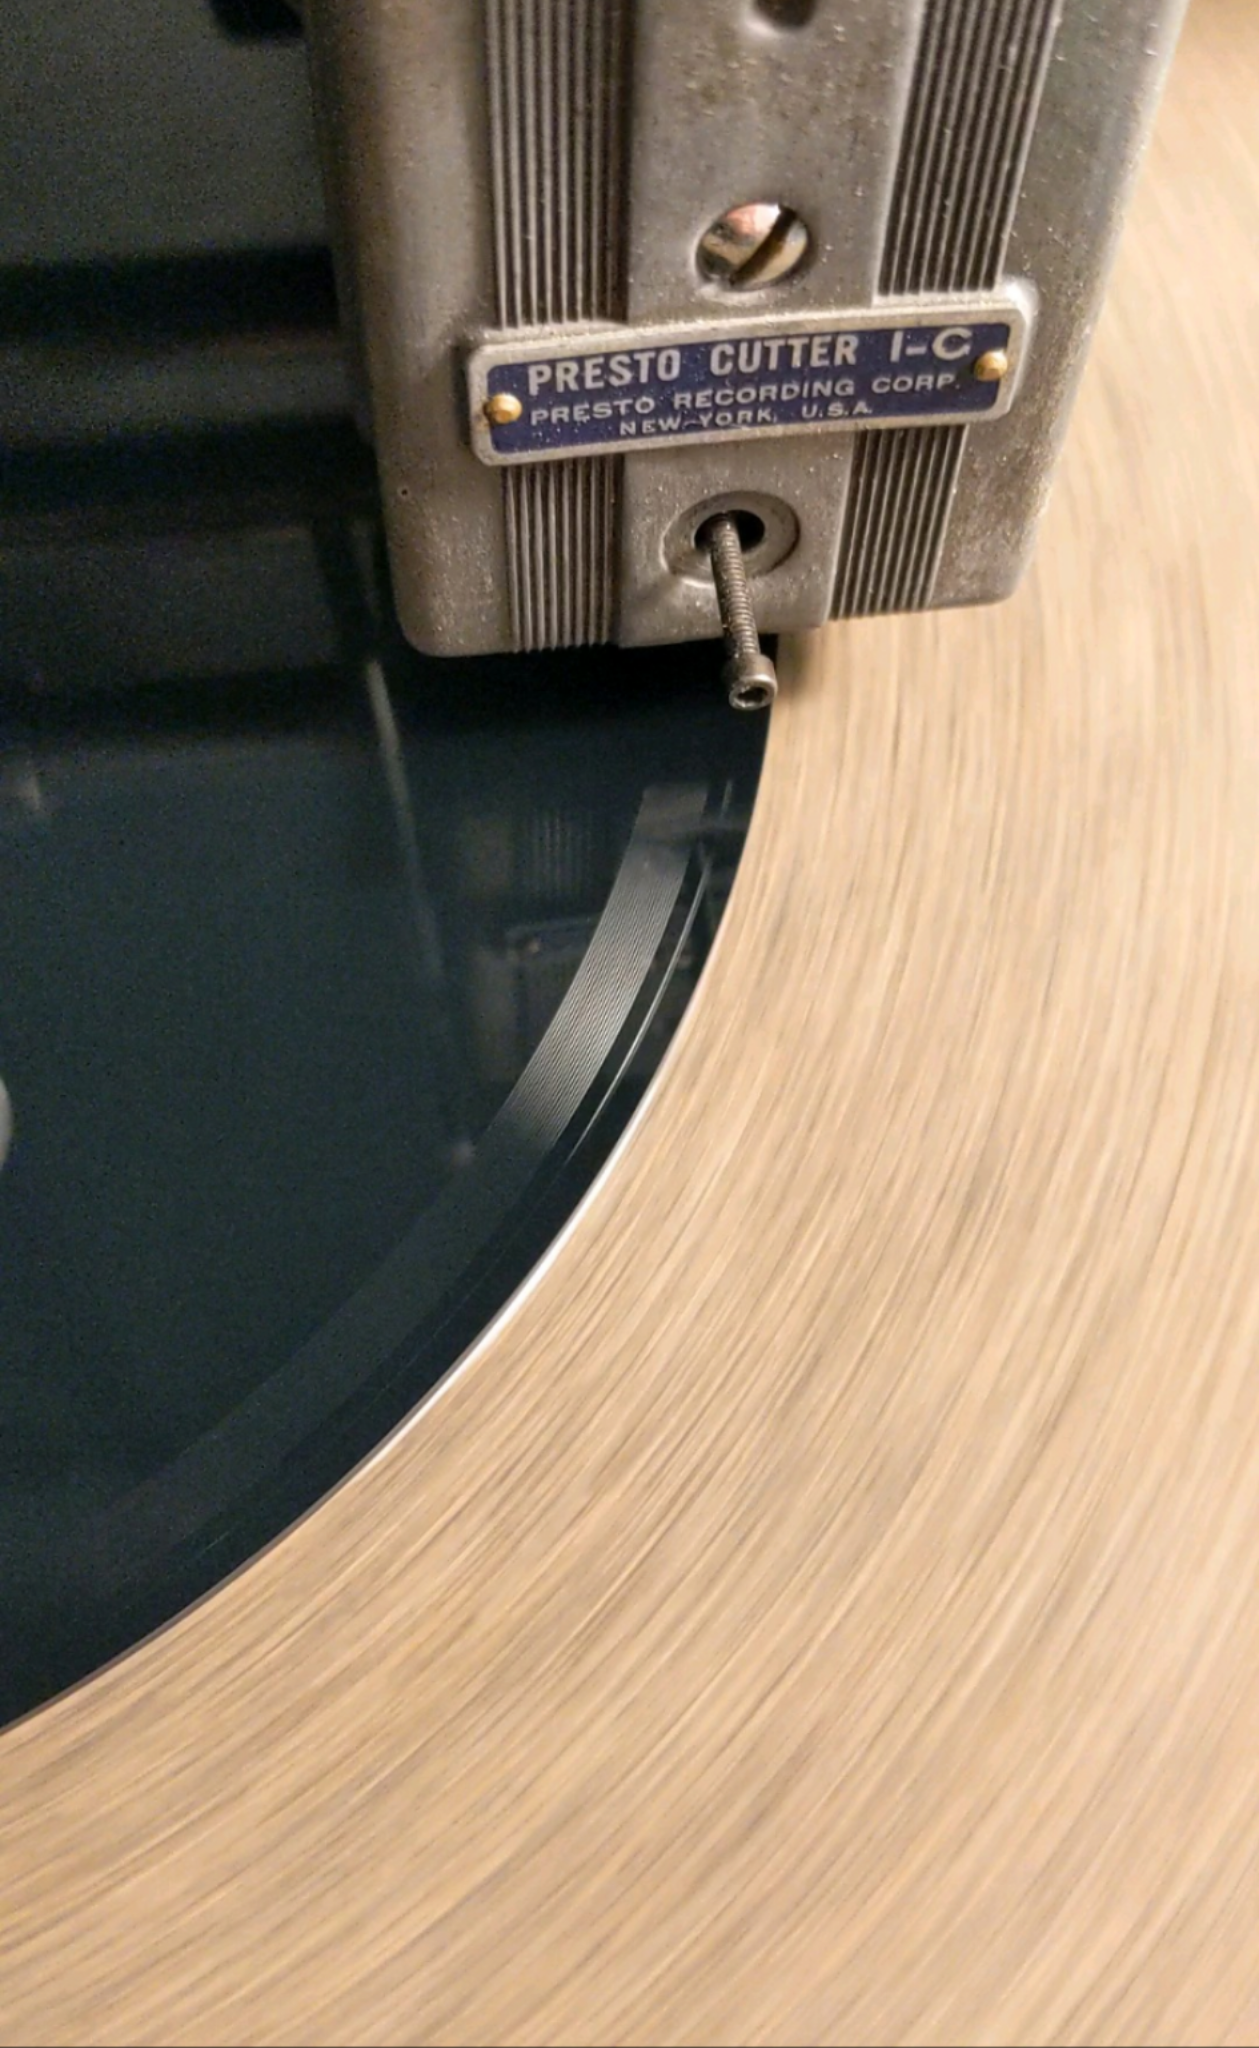 Presto Cutter Head on Black Disc